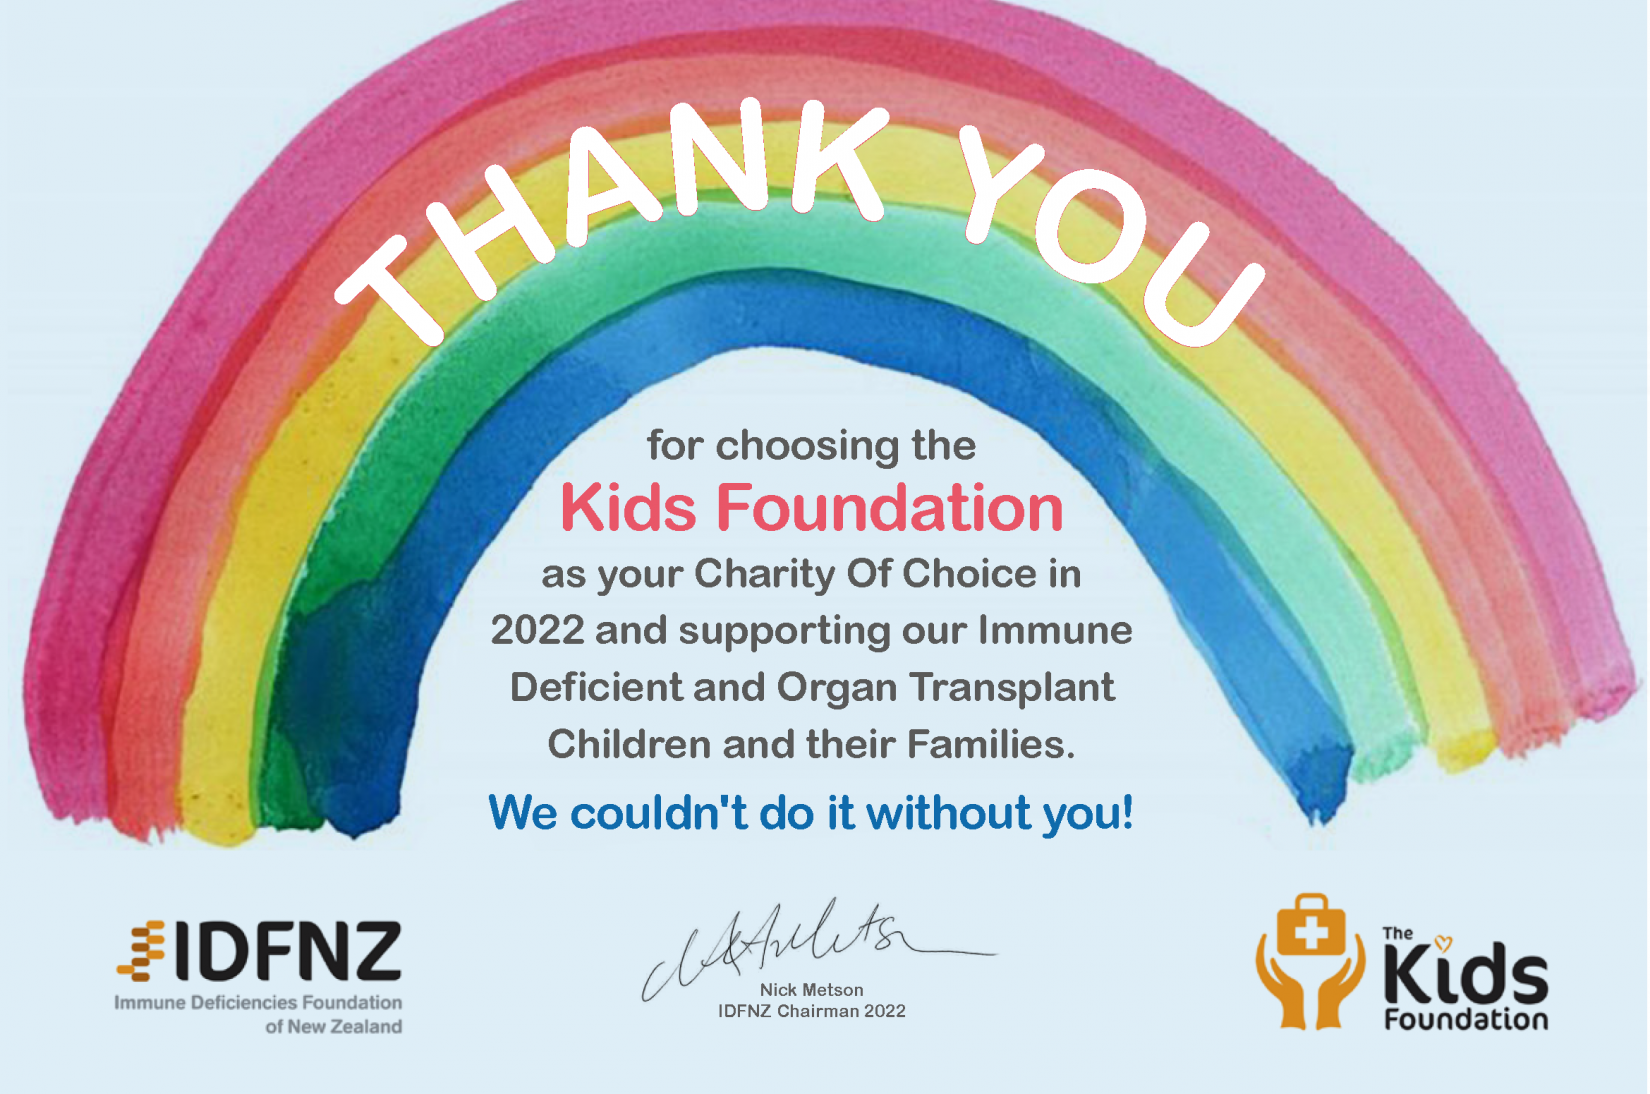 IDFNZ / Kids Foundation